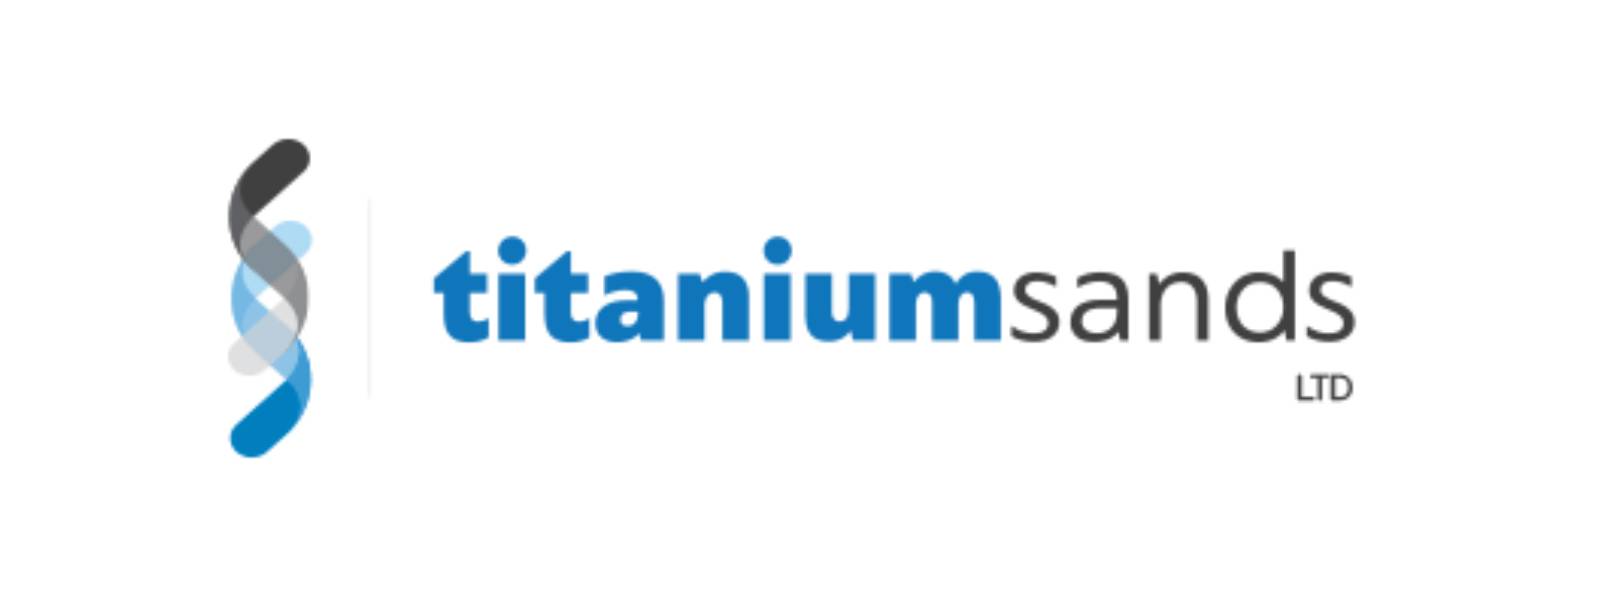 Titanium Sands Ltd. halts trading amid Mannar Island controversy